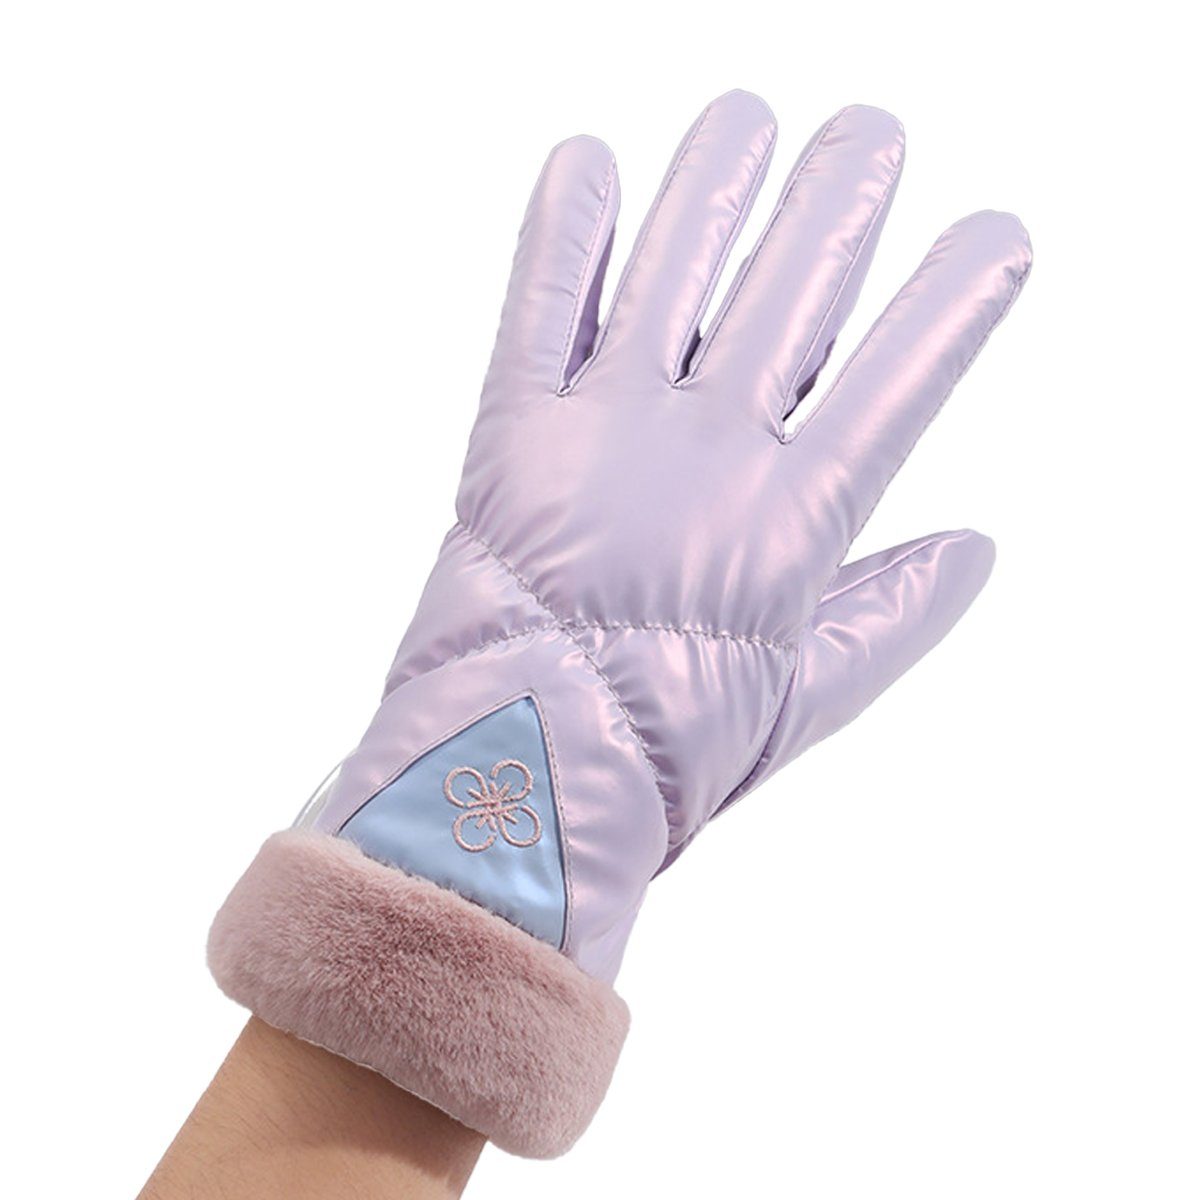 ZmdecQna Fleecehandschuhe Damen Winter Warm Touchscreen Handschuhe Thermo Winterhandschuhe lila